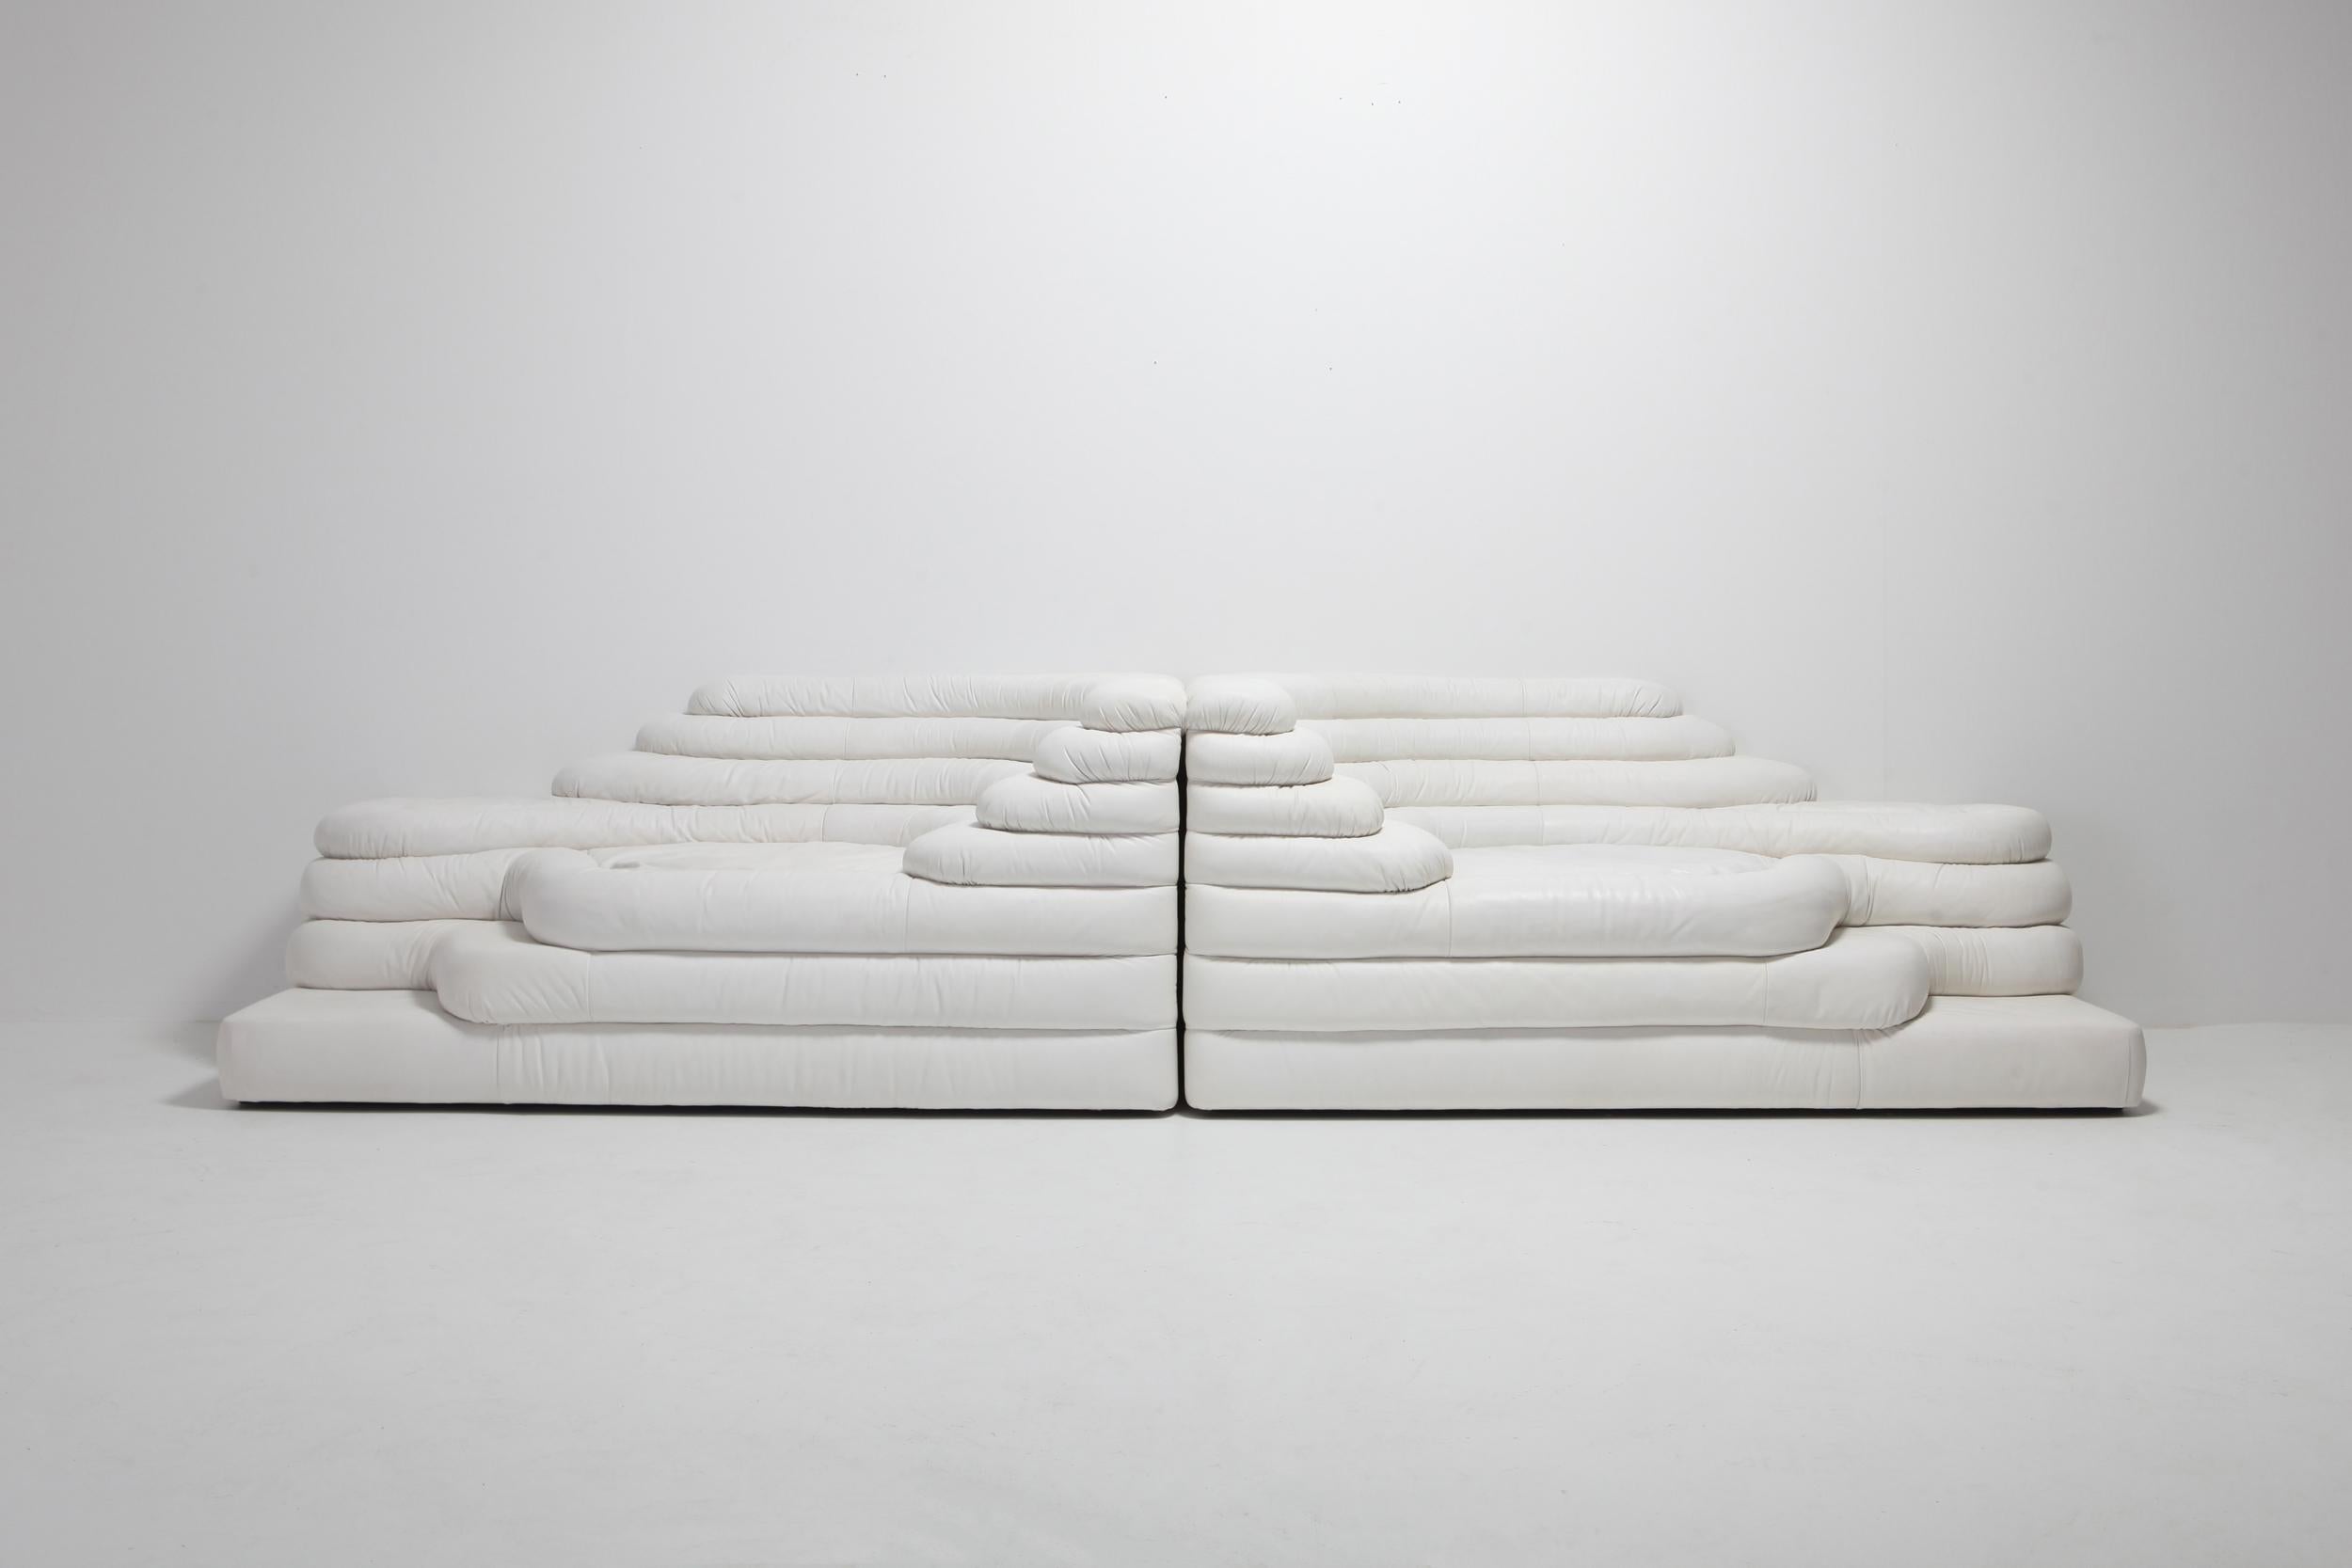 De Sede 'Terrazza' Sofas DS 1025 in White Leather 1972 by U. Klug & Ueli Berger 3